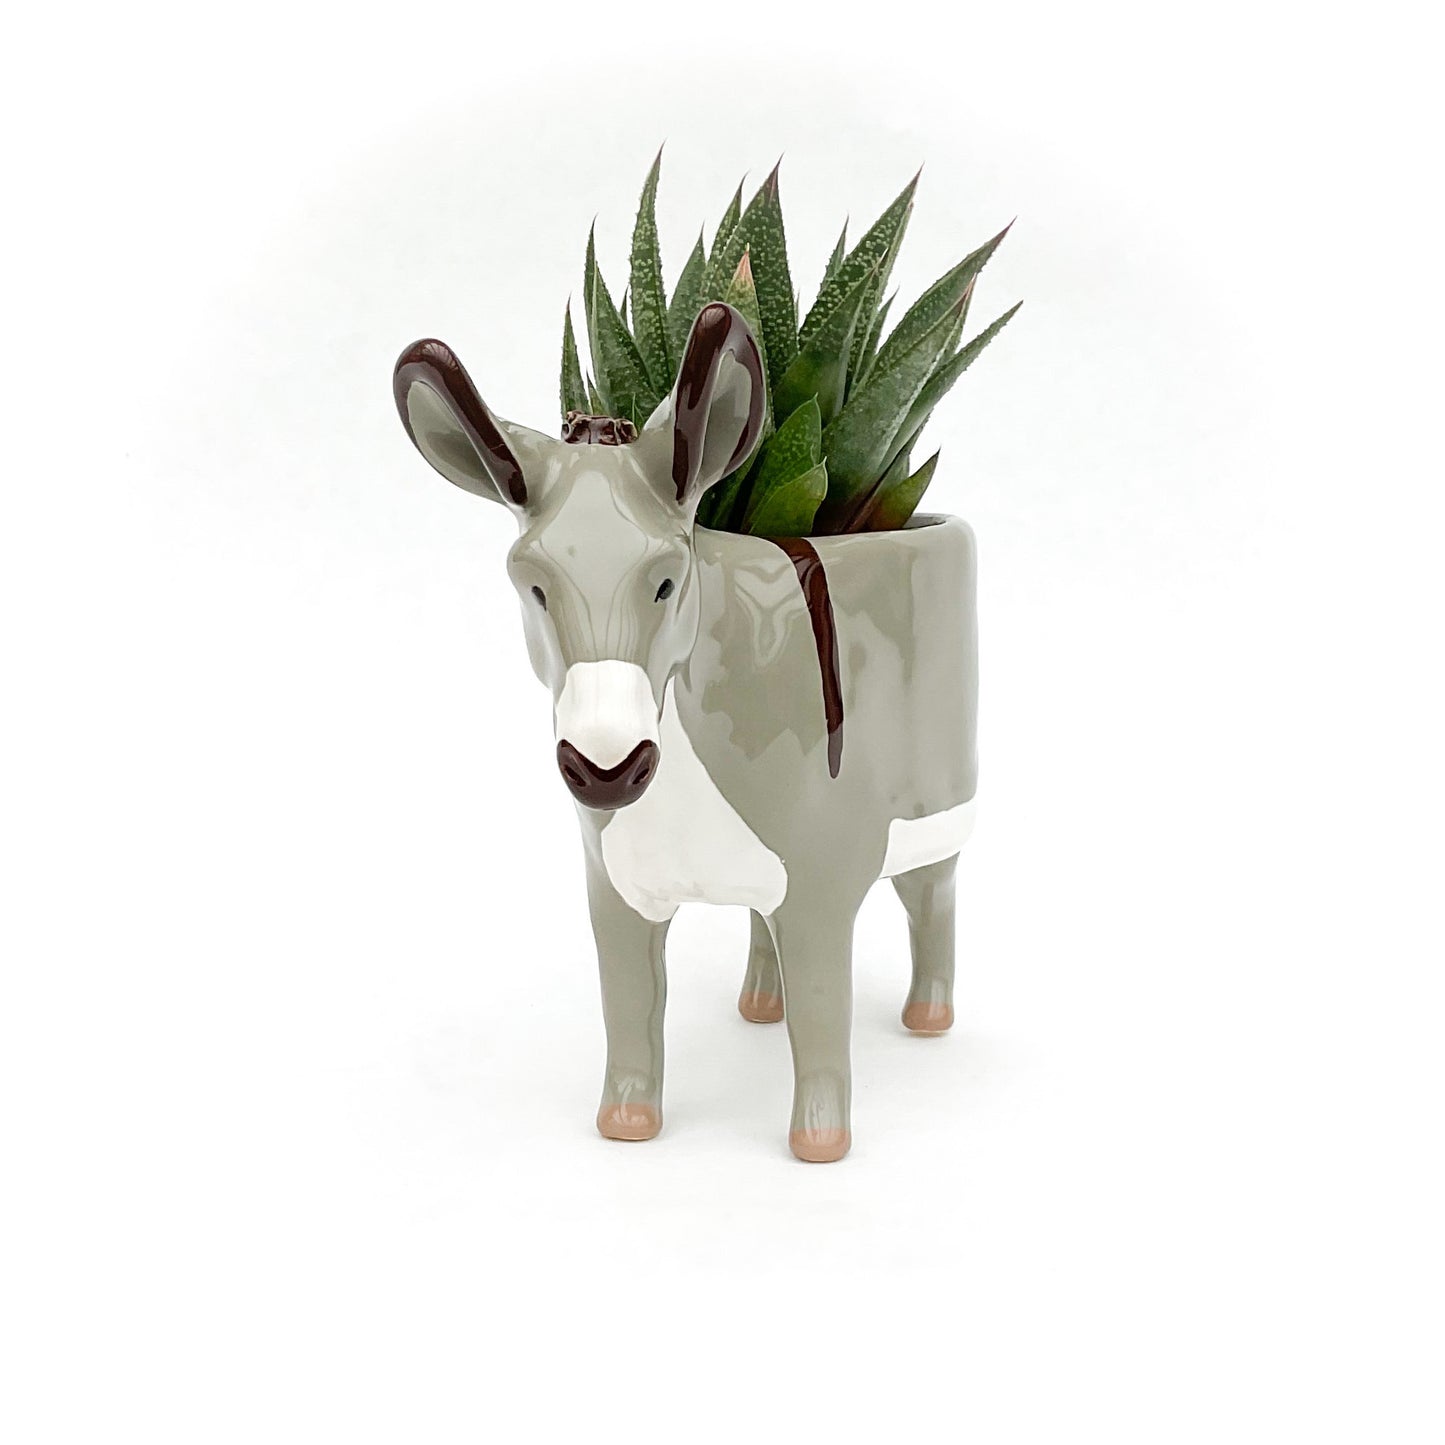 Miniature Mediterranean Donkey Pot